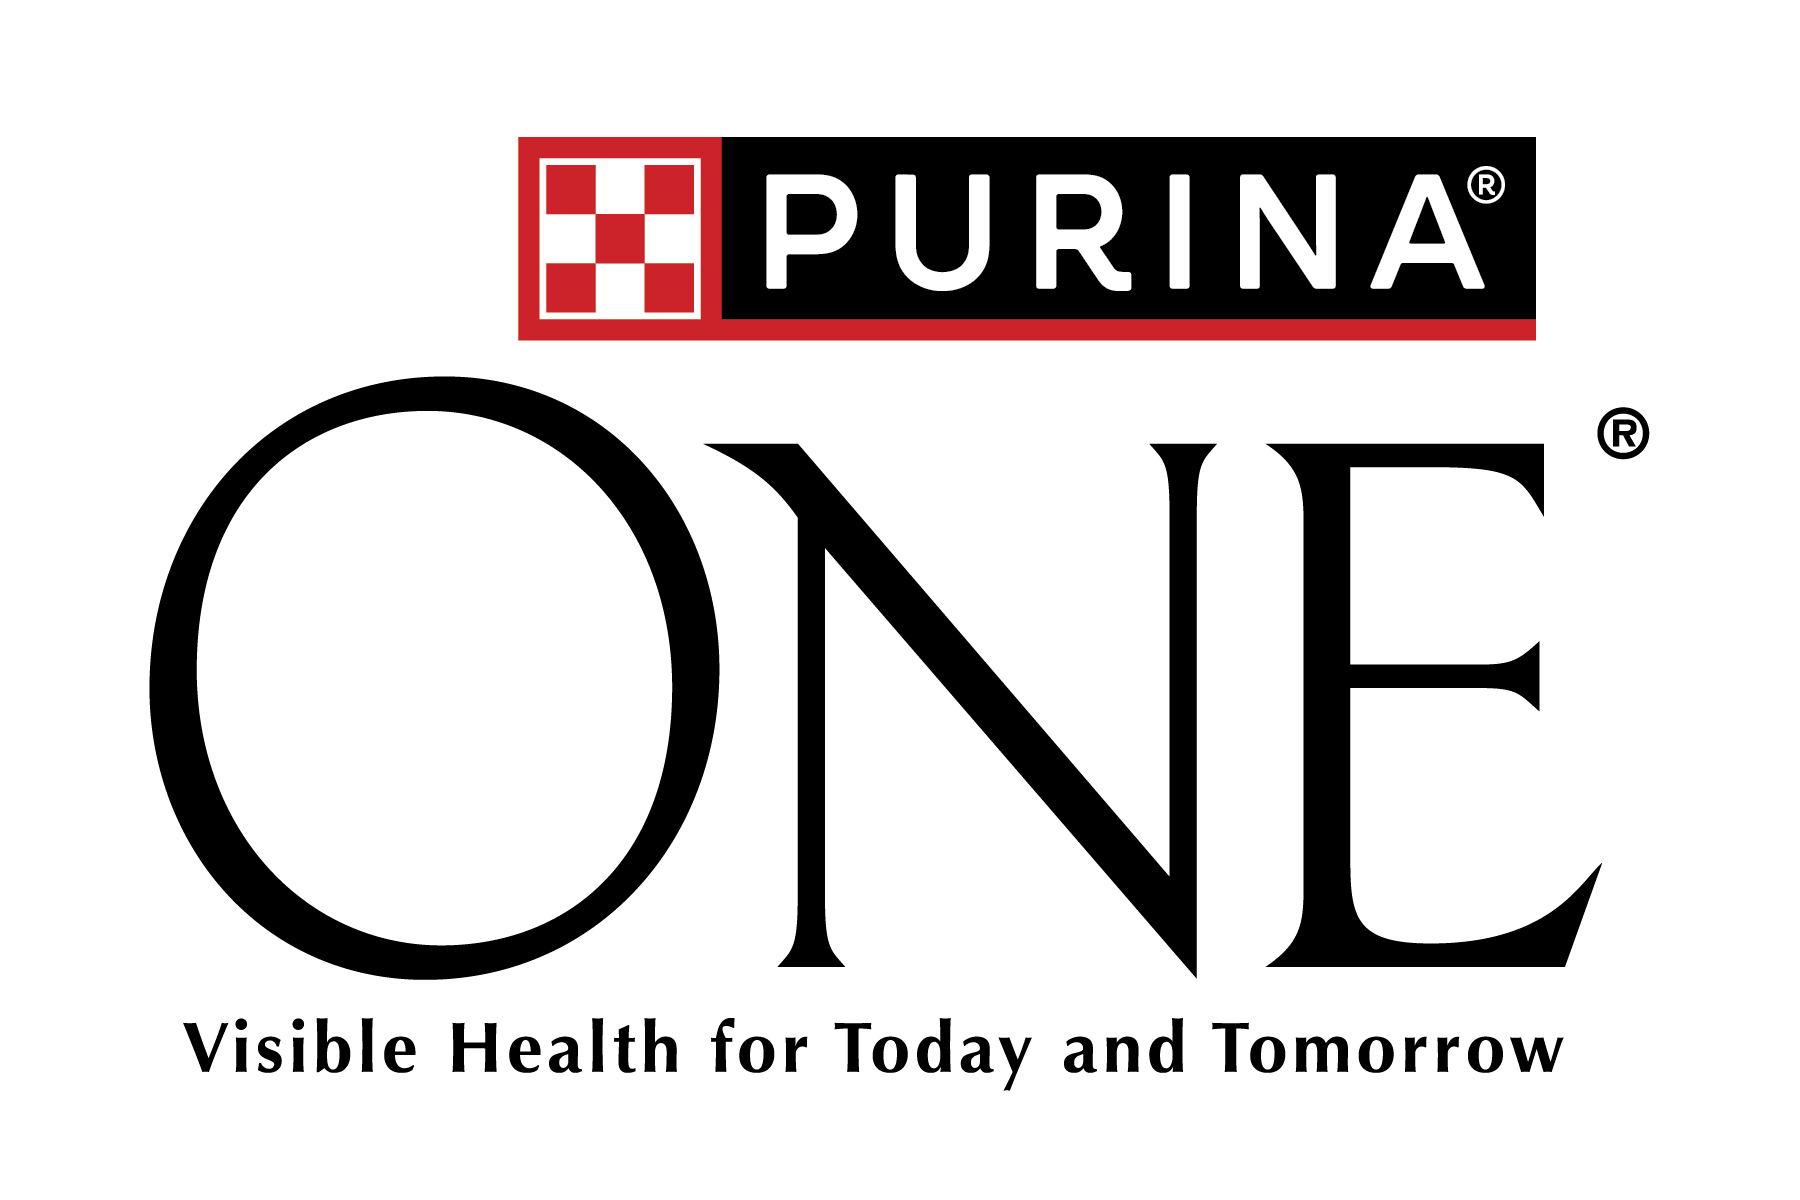 Purina One logotyp